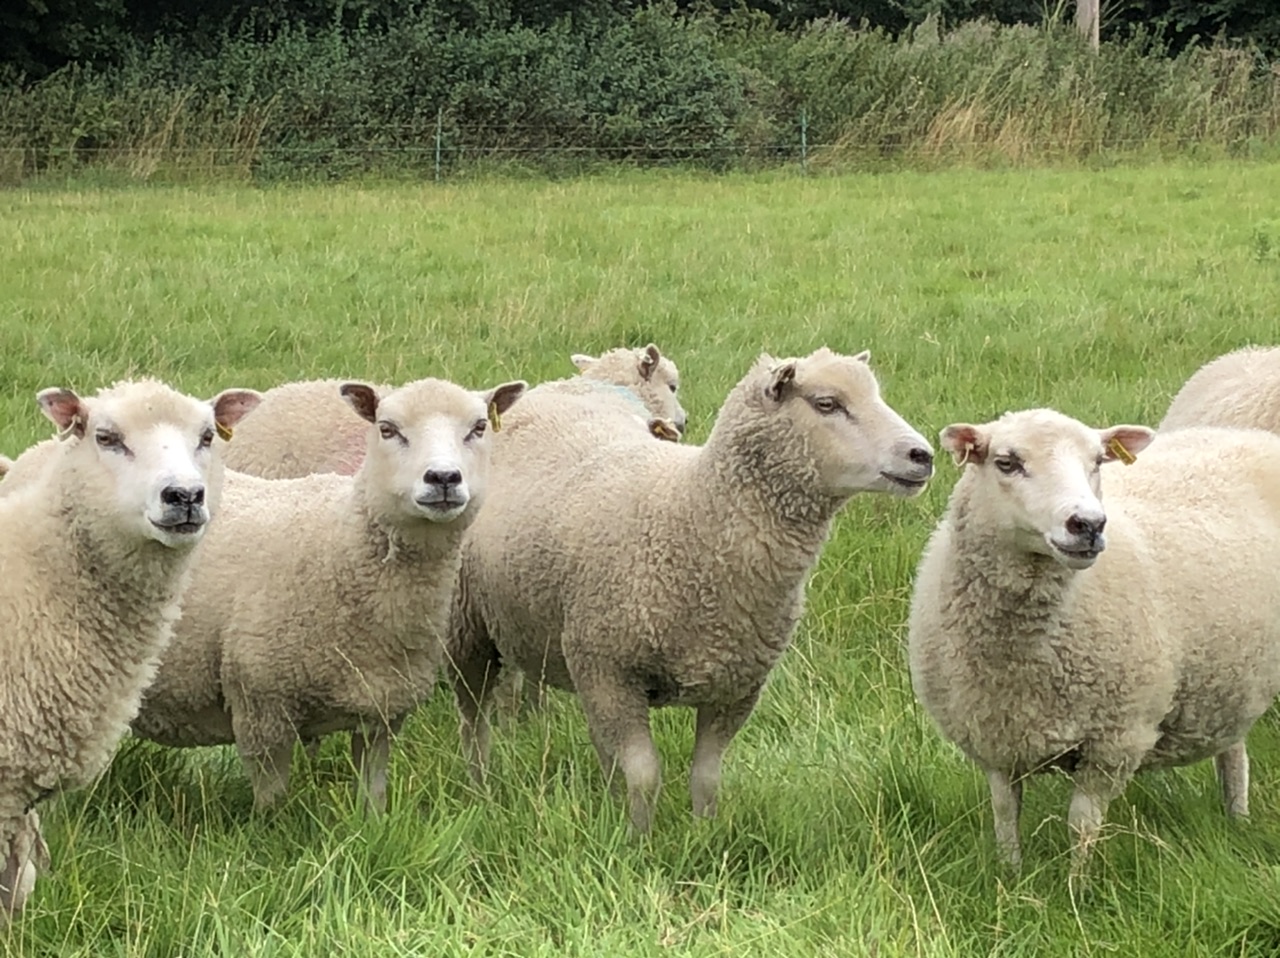 For sale registered shearling ewes